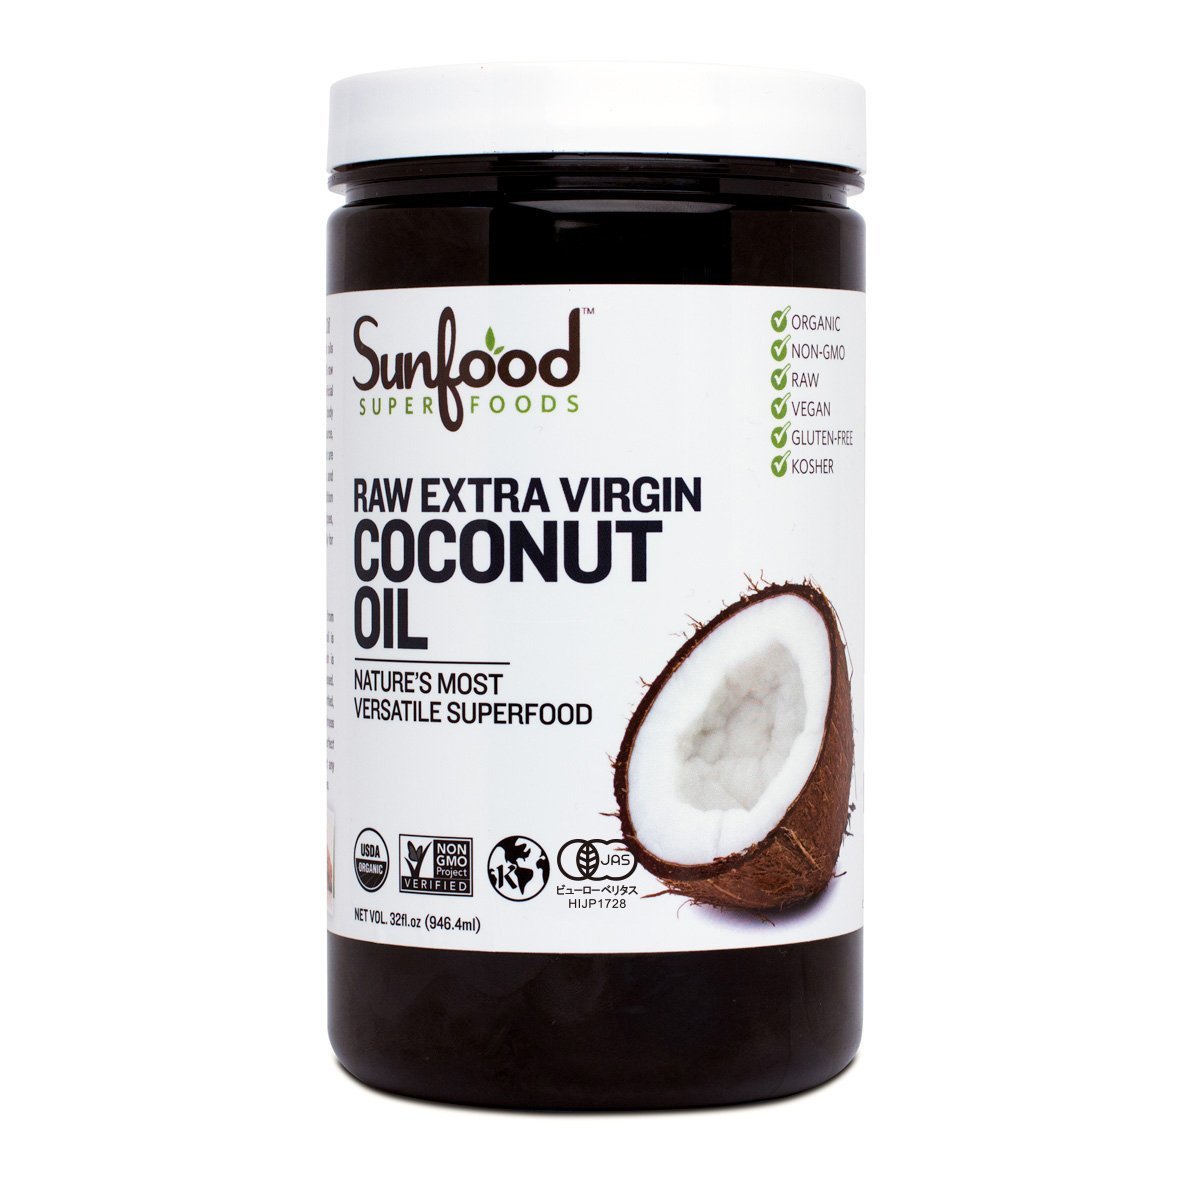 Sunfood Superfoods Extra Virgin Coconut Oil